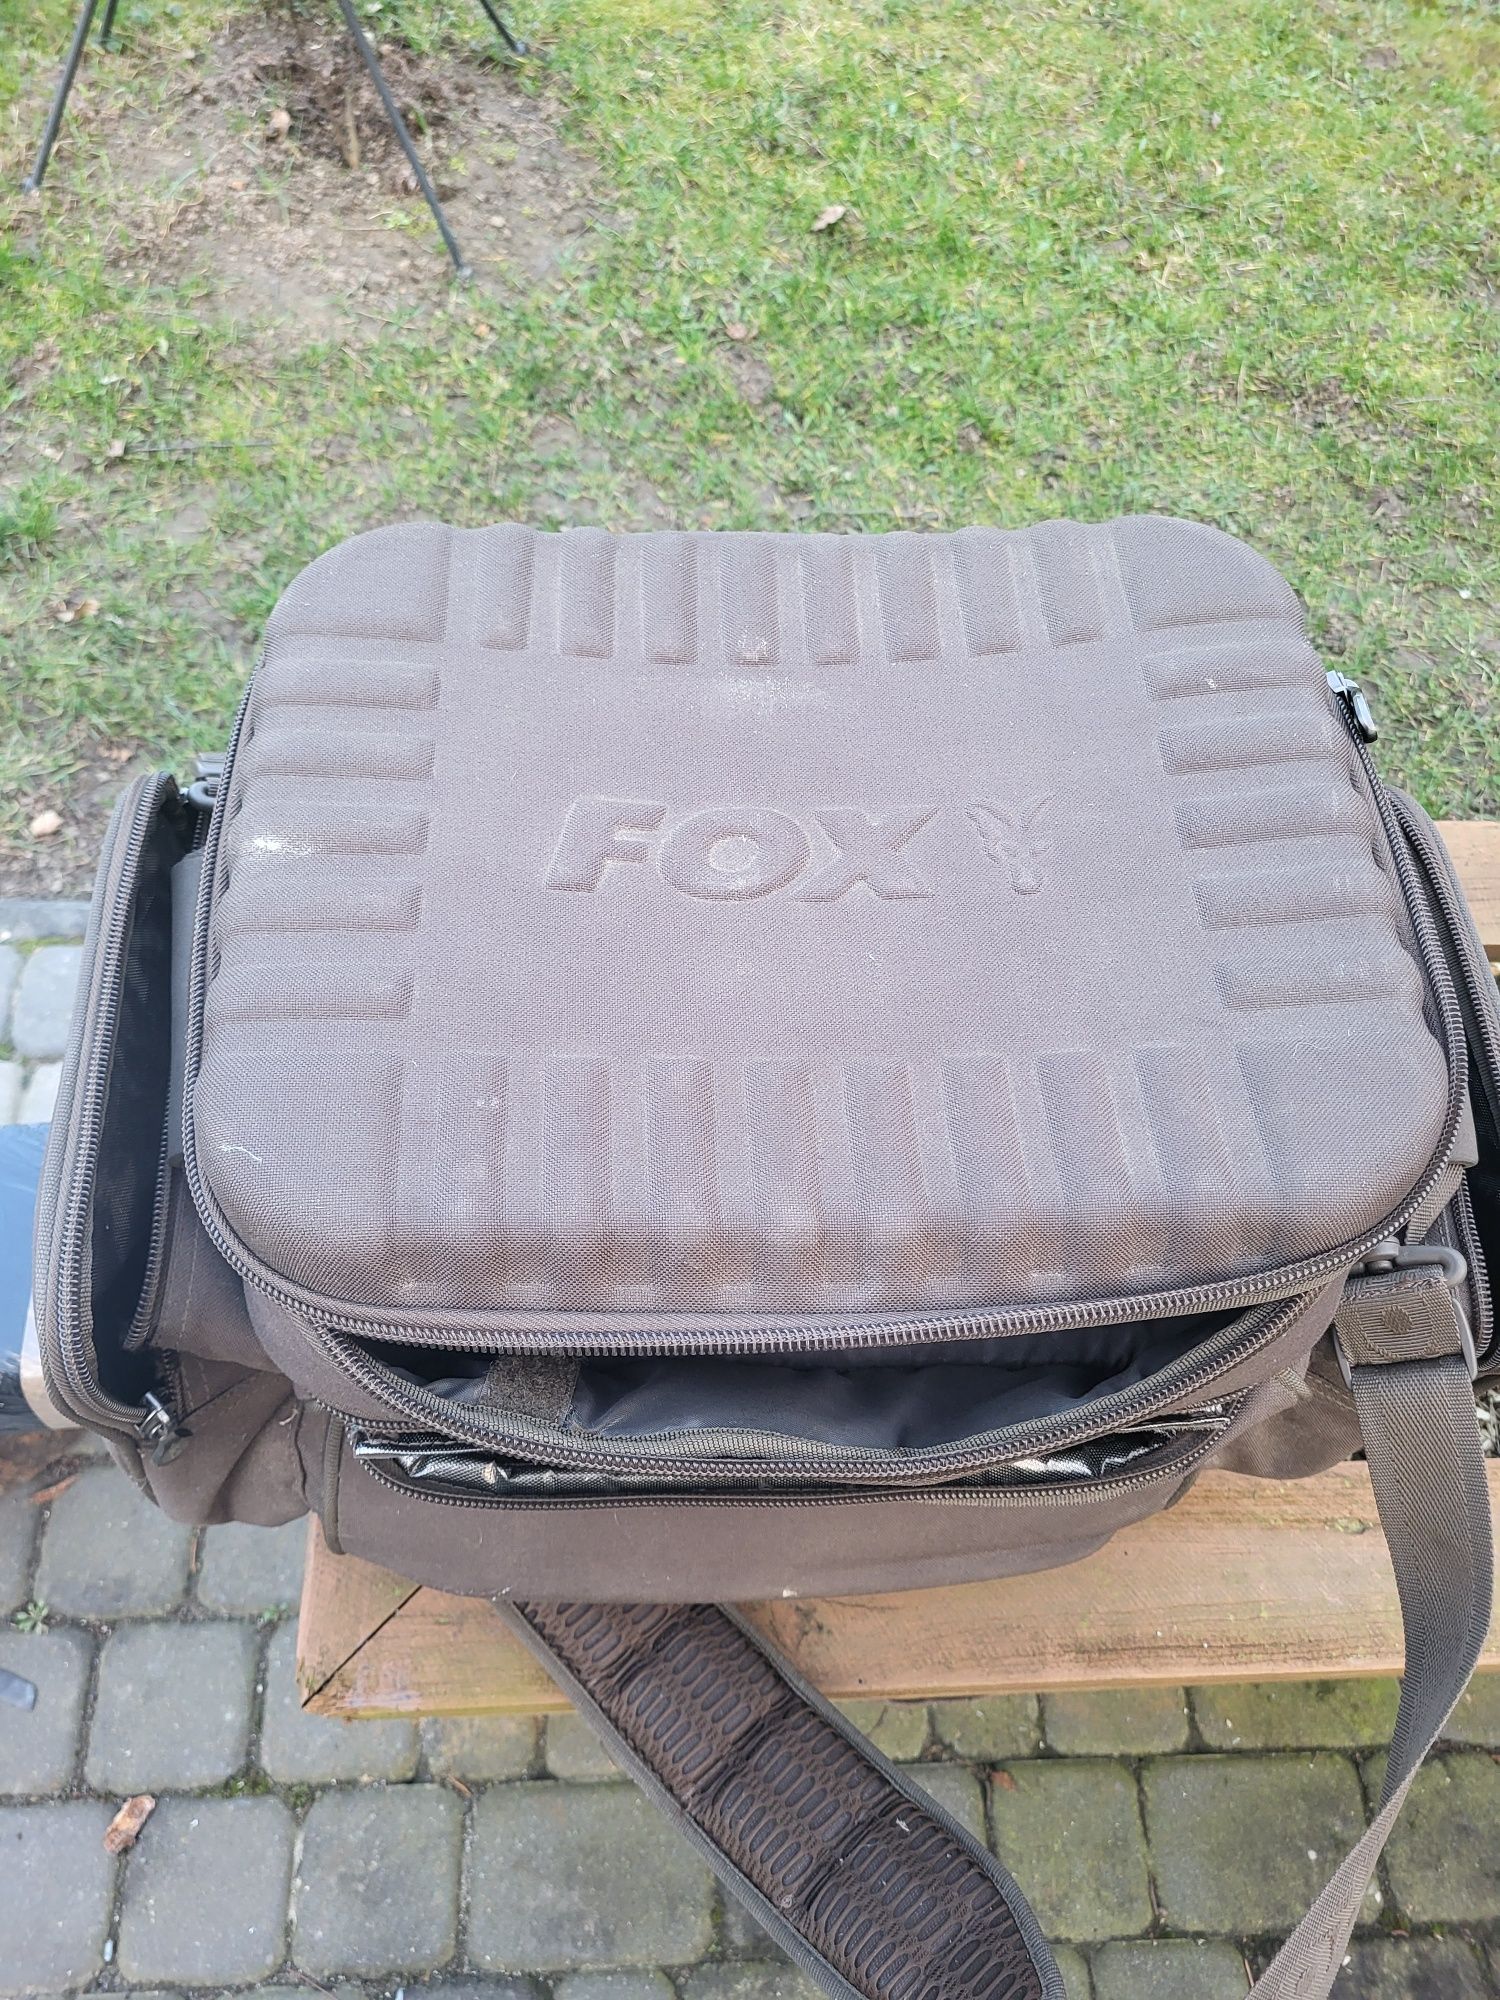 Fox , 2 Man Cooler Food Bag System